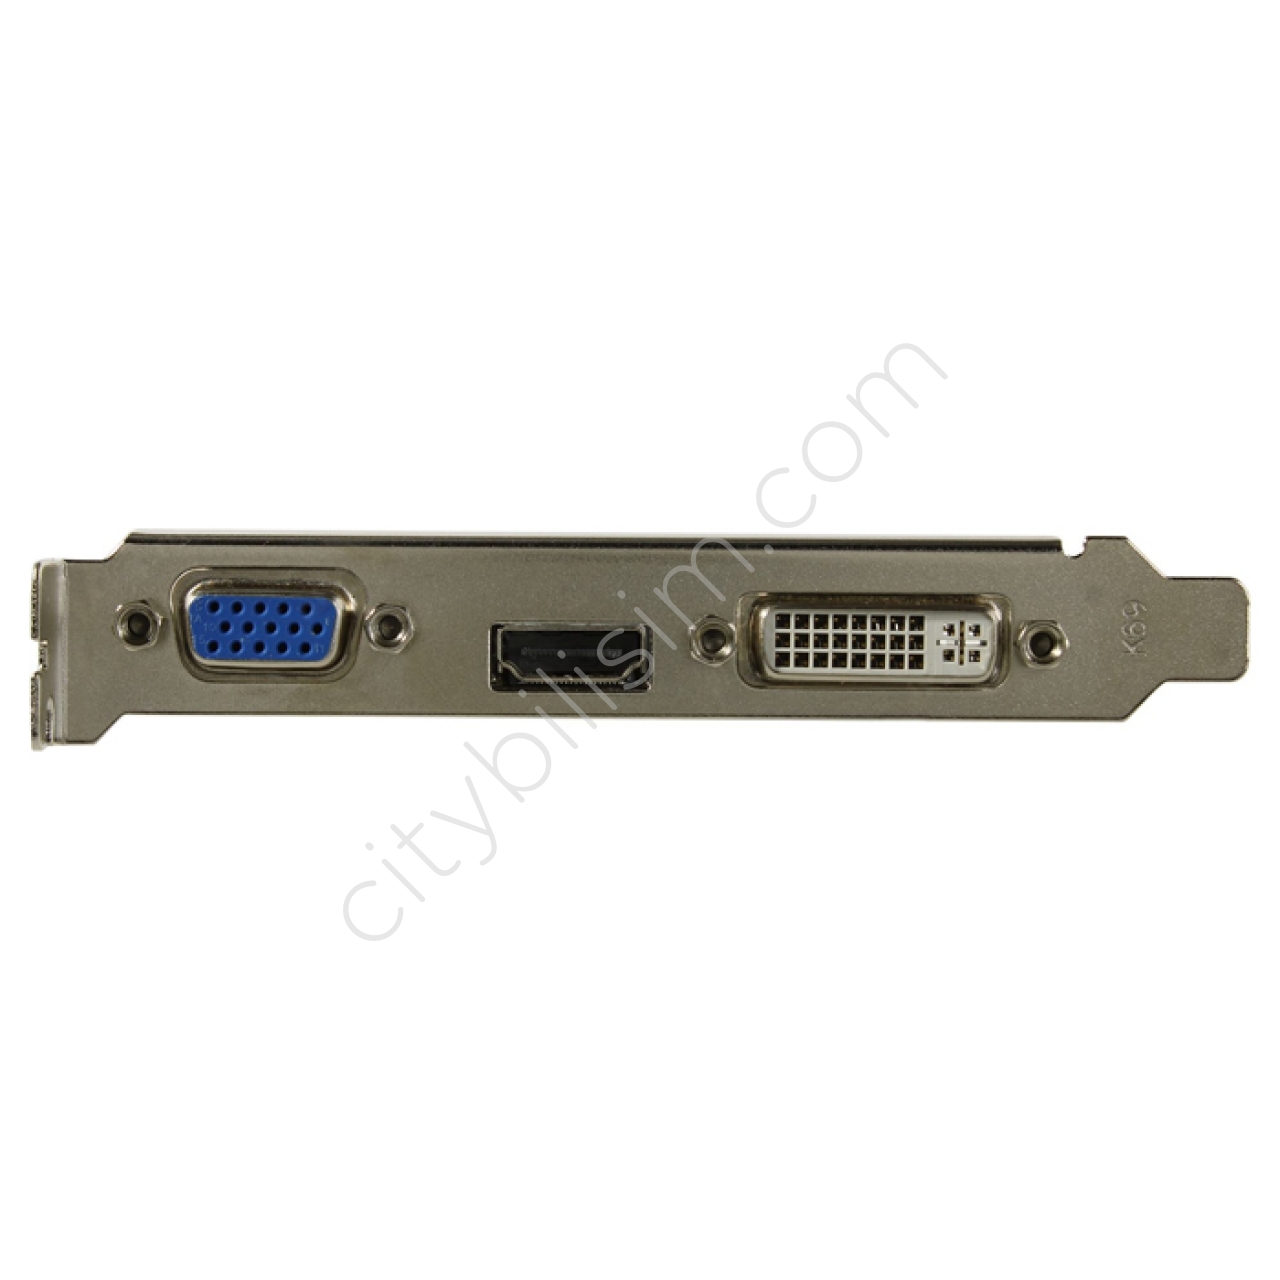 AFOX R5 220 2GB DDR3 64 Bit AFR5220-2048D3L9 (LP)